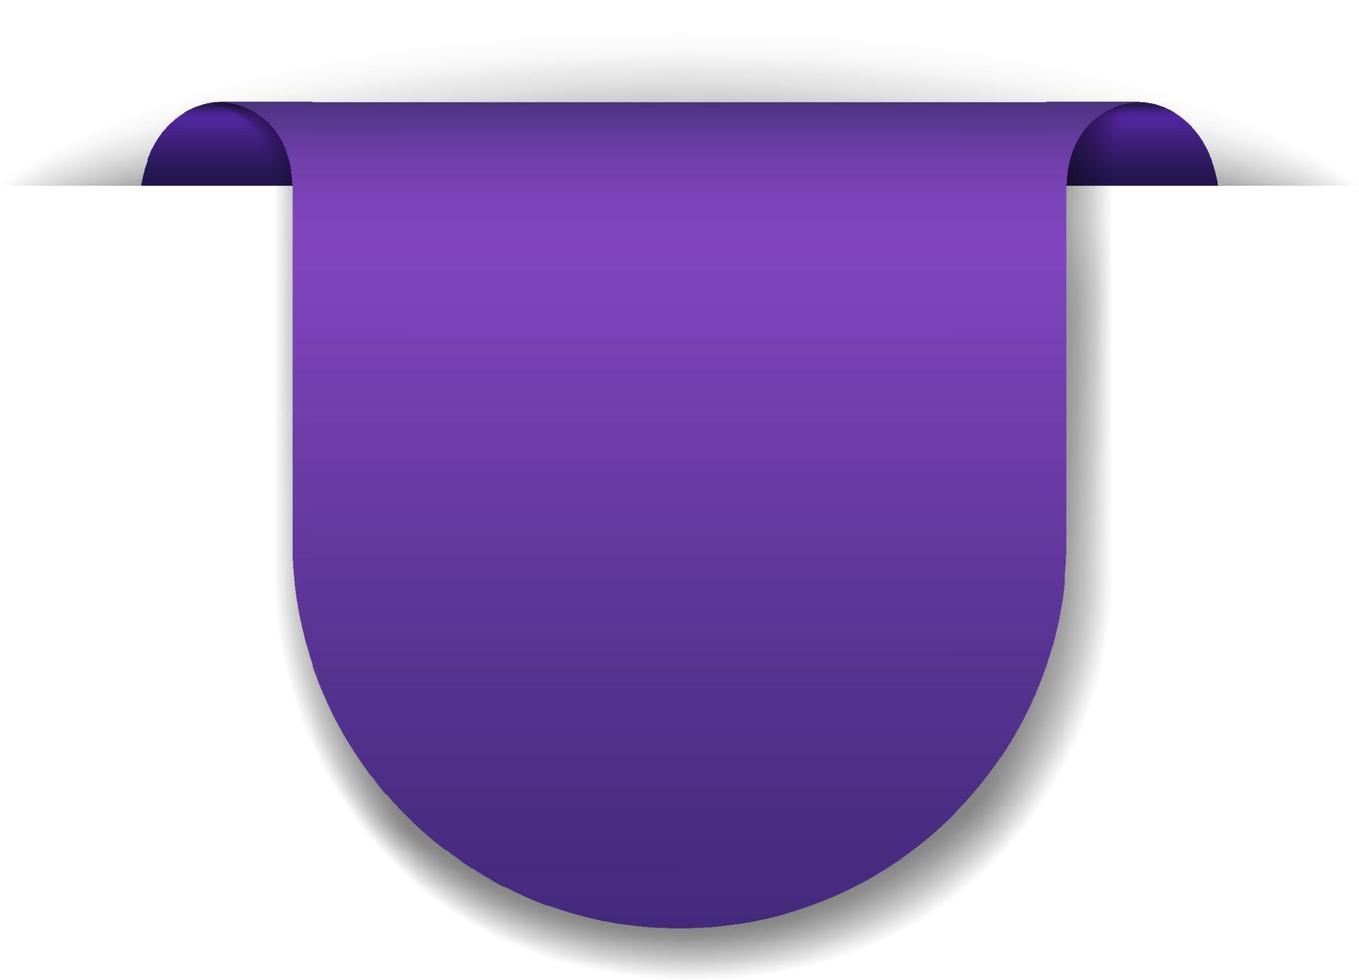 design de banner violeta em fundo branco vetor